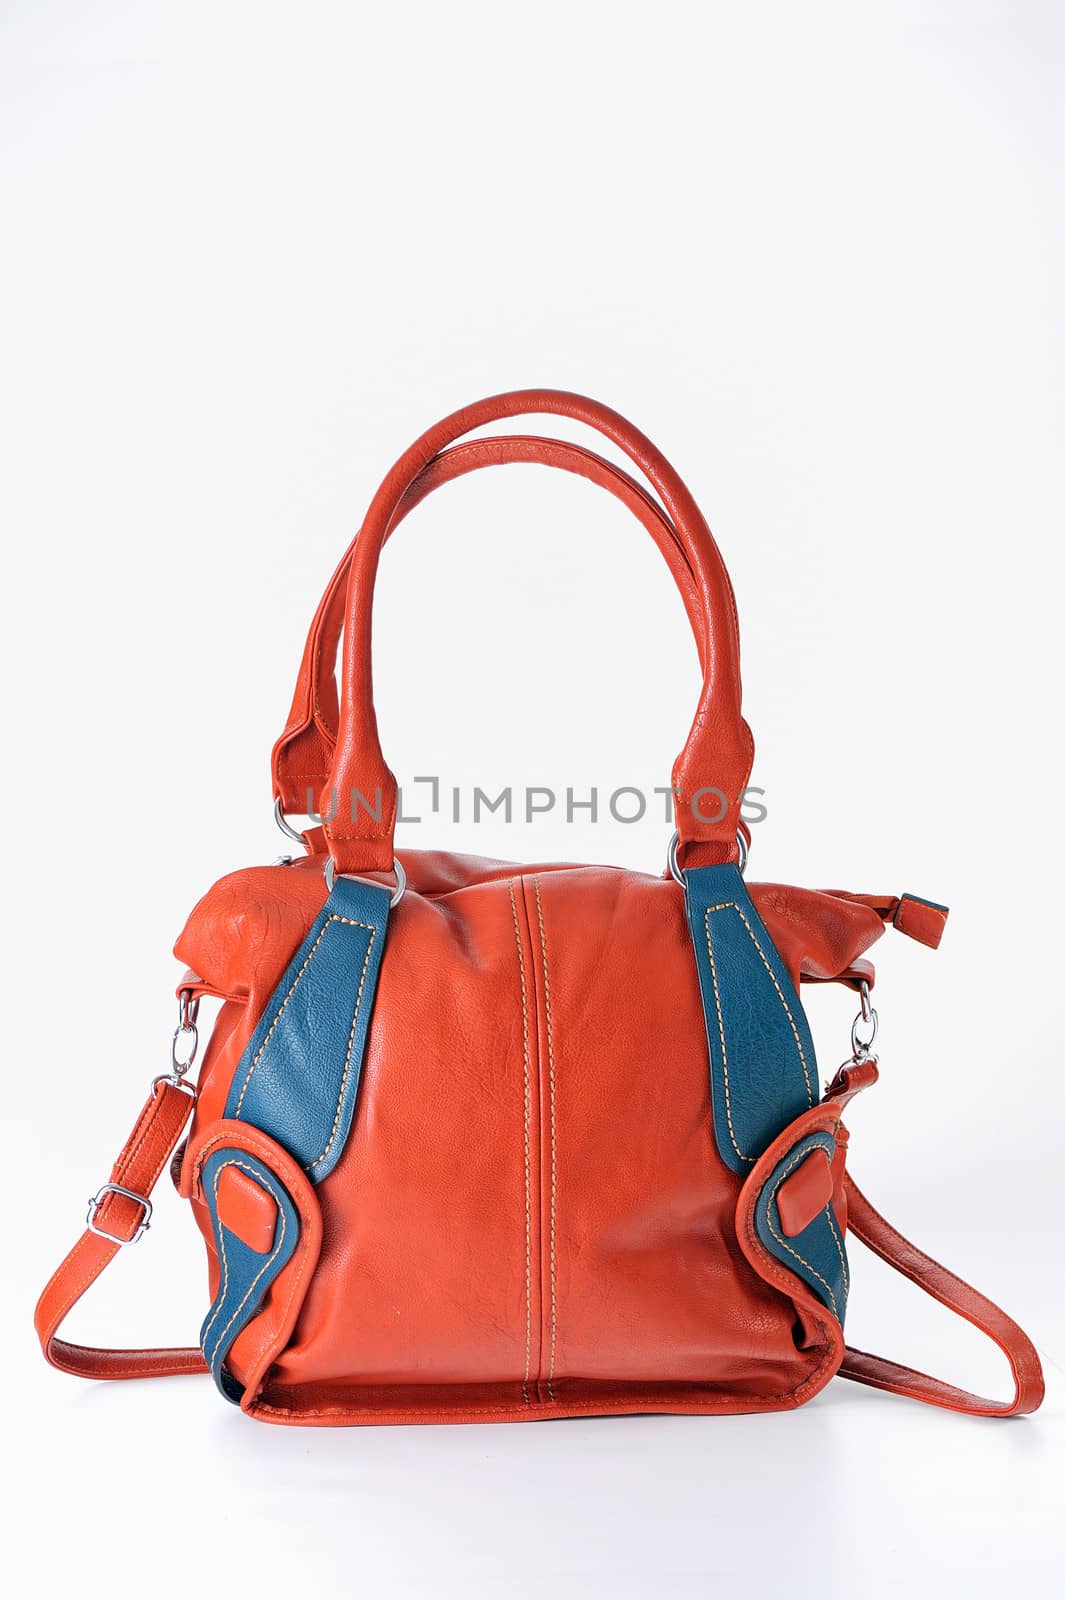 red ladies handbag by mady70